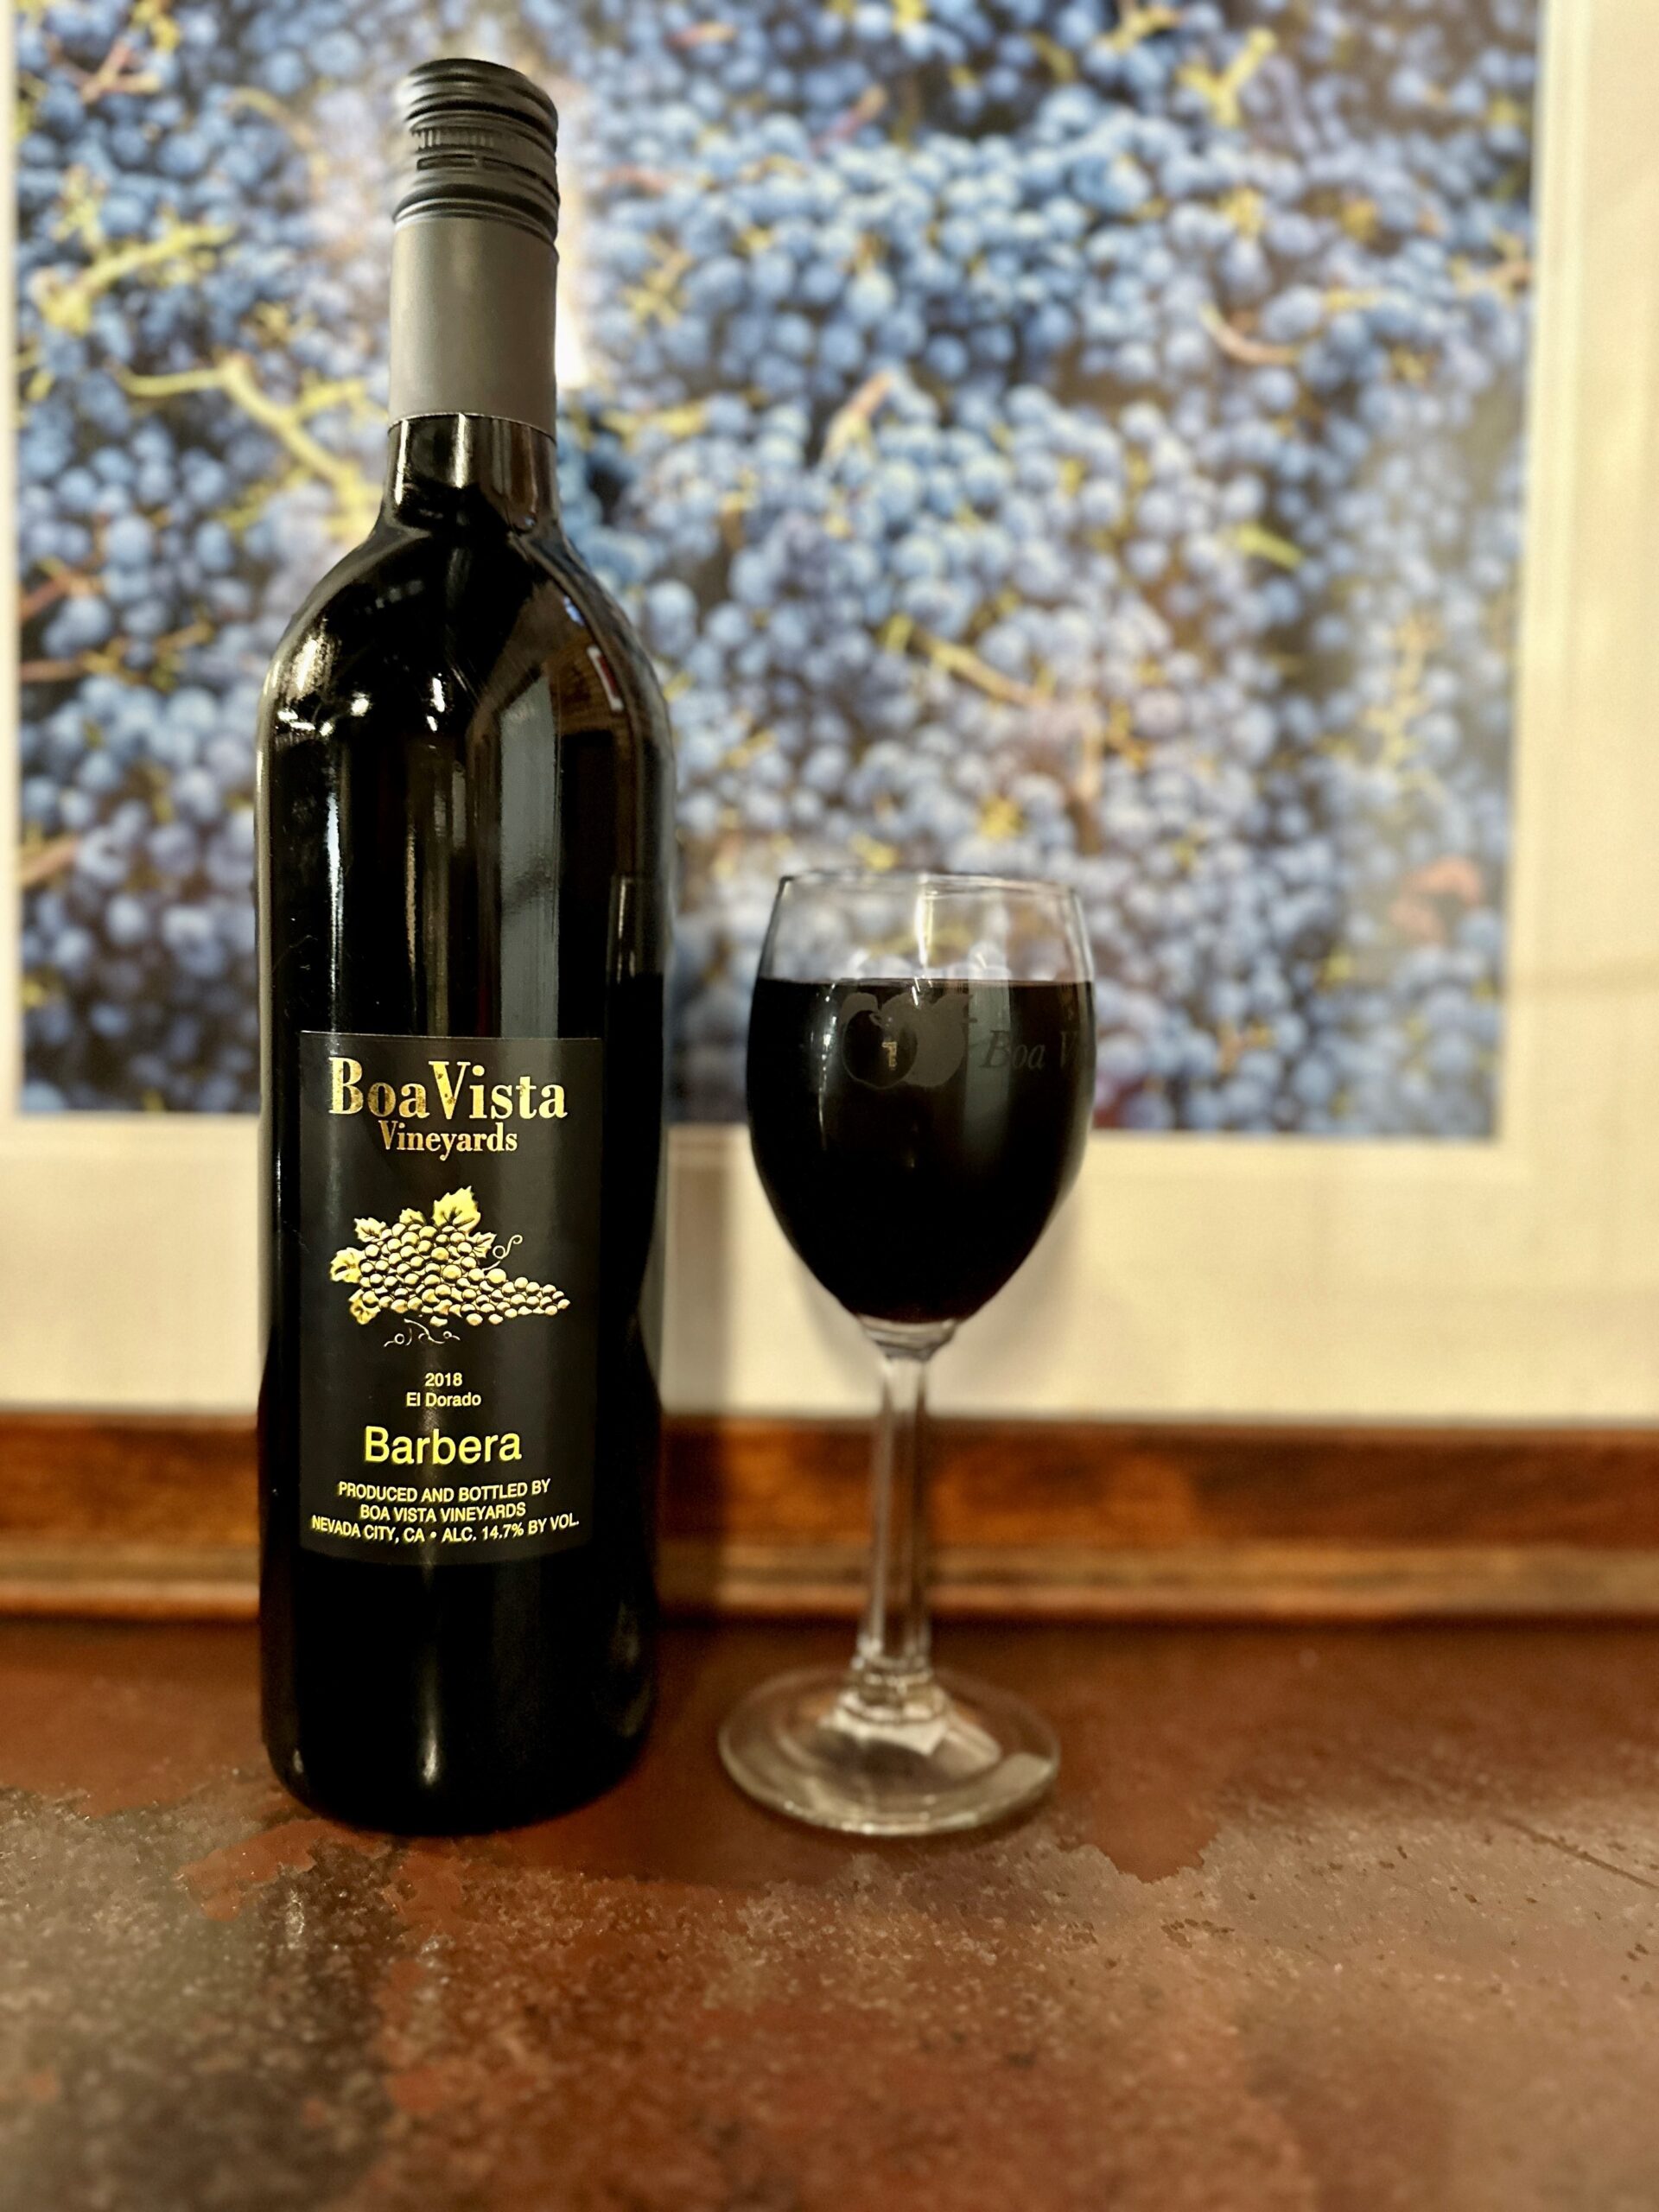 Boa Vista Barbera wine bottle and glass